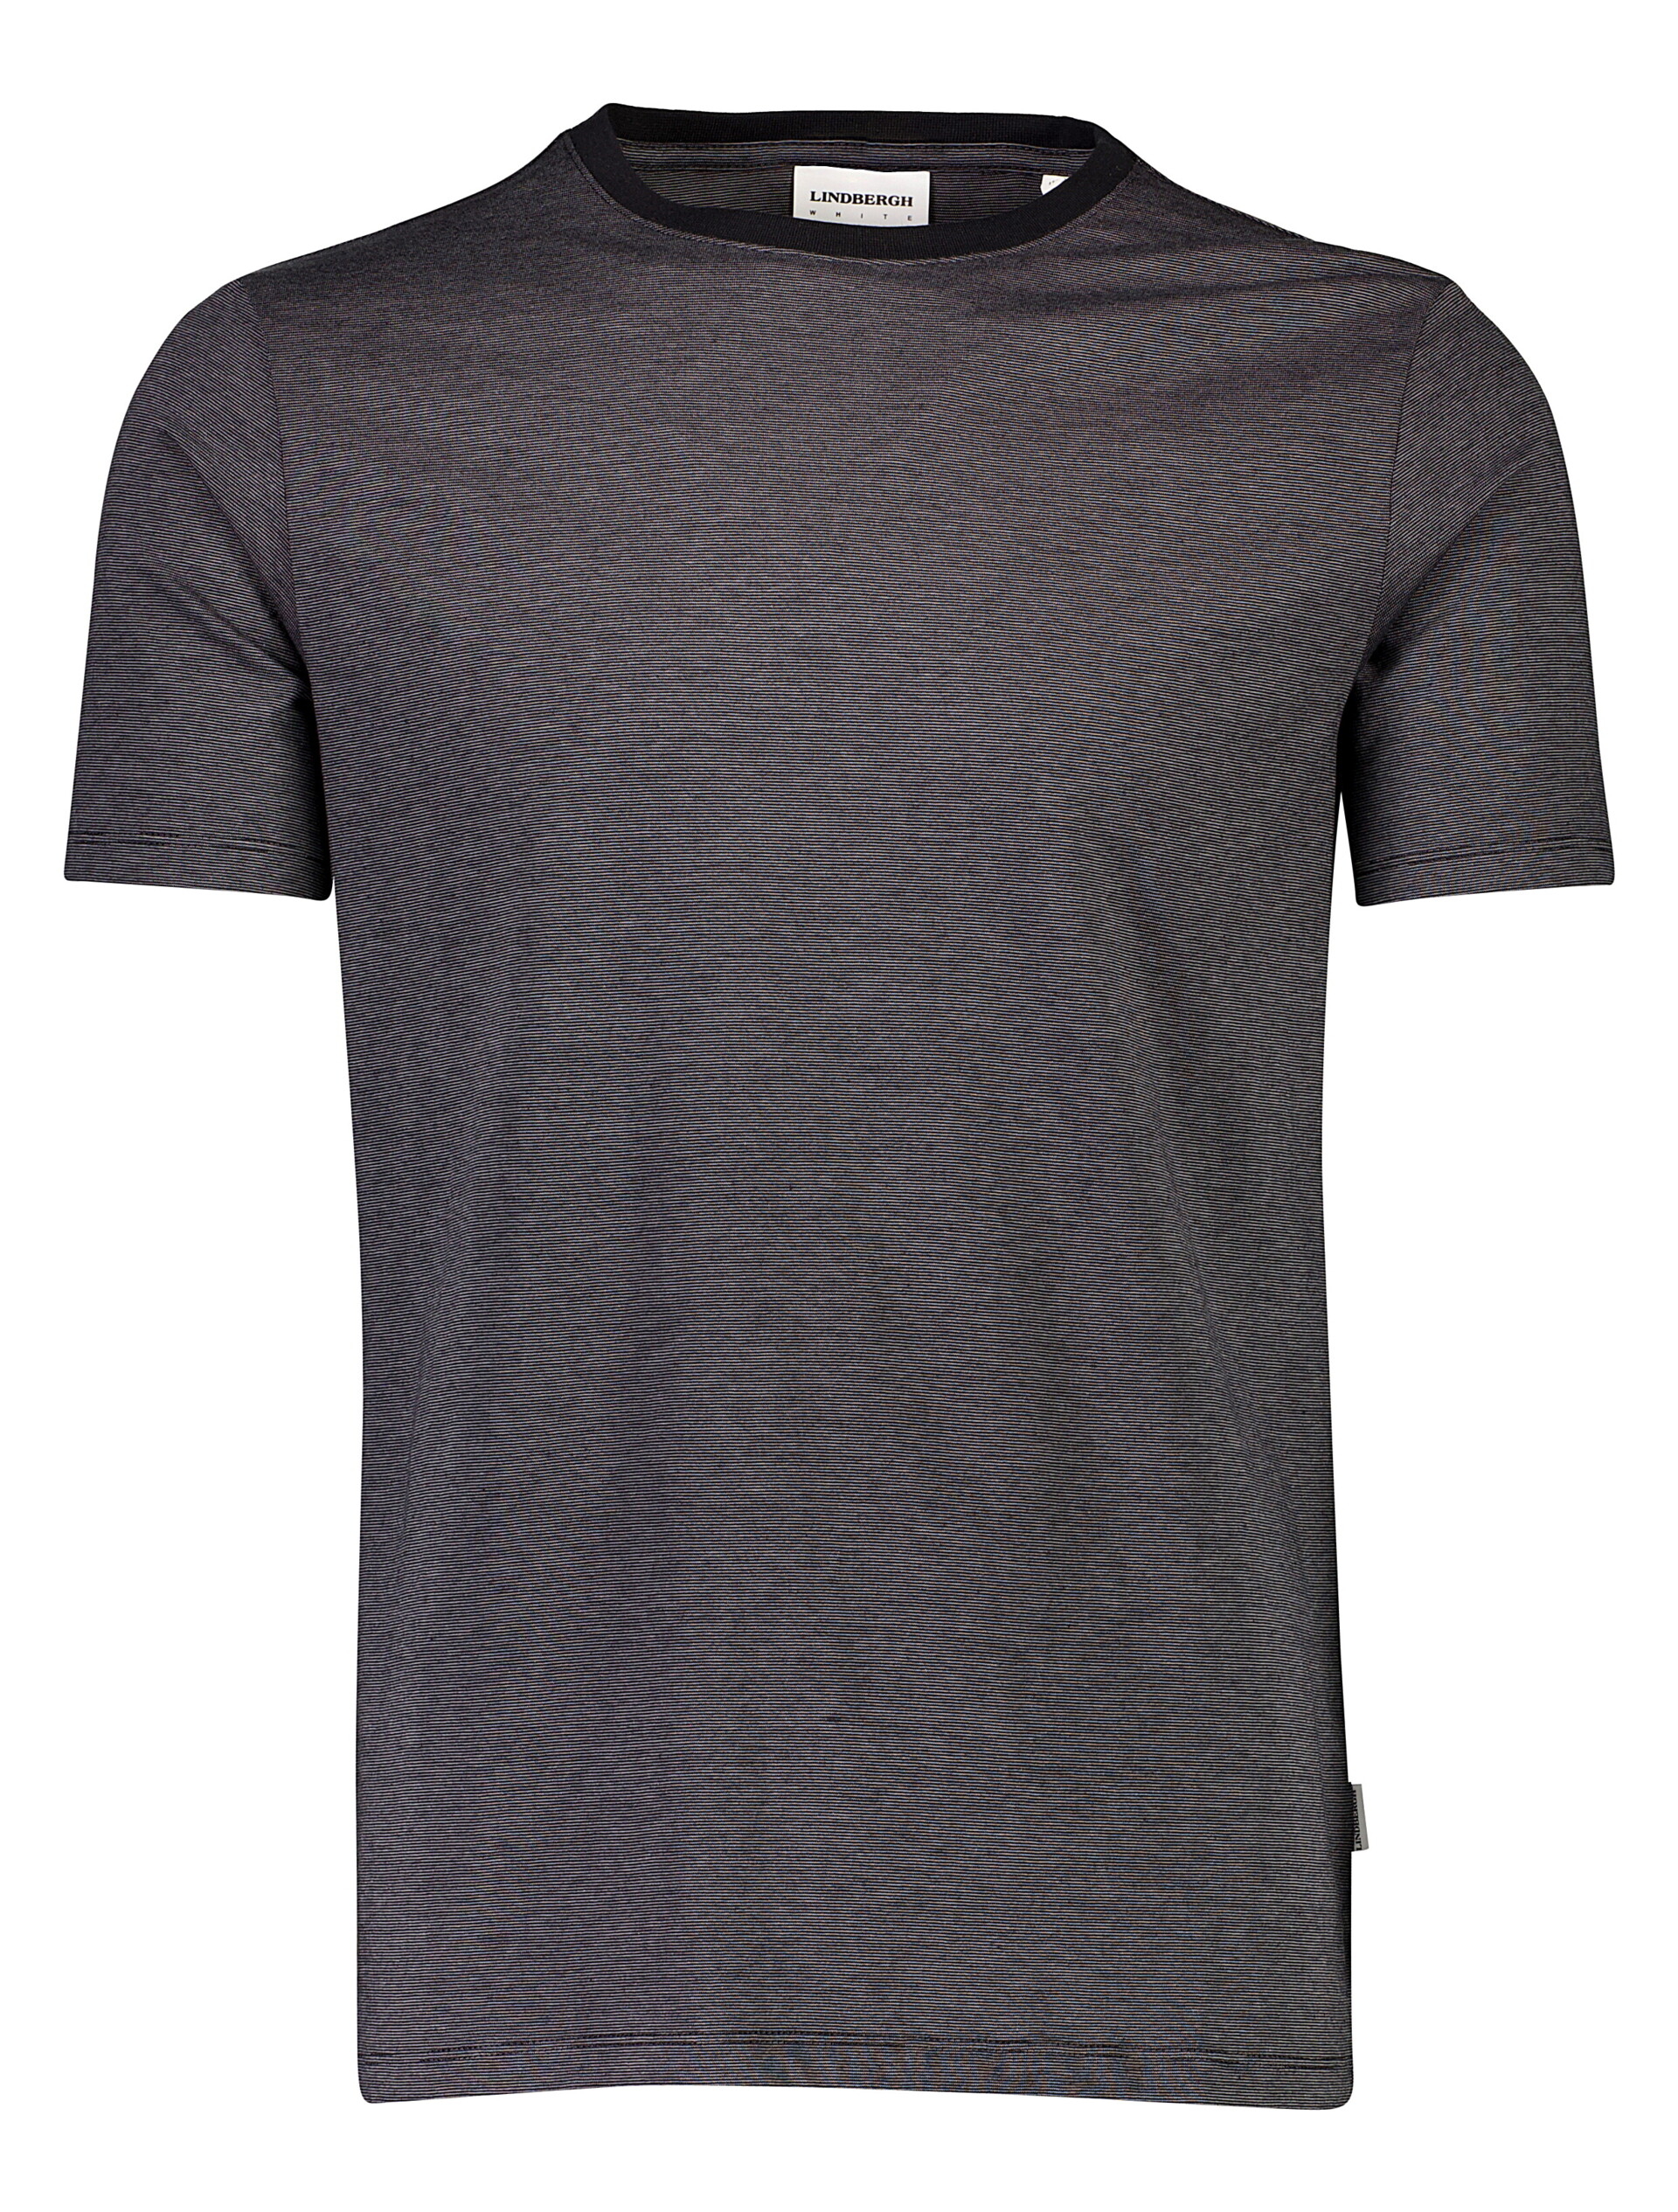 Lindbergh T-shirt grijs / dk grey